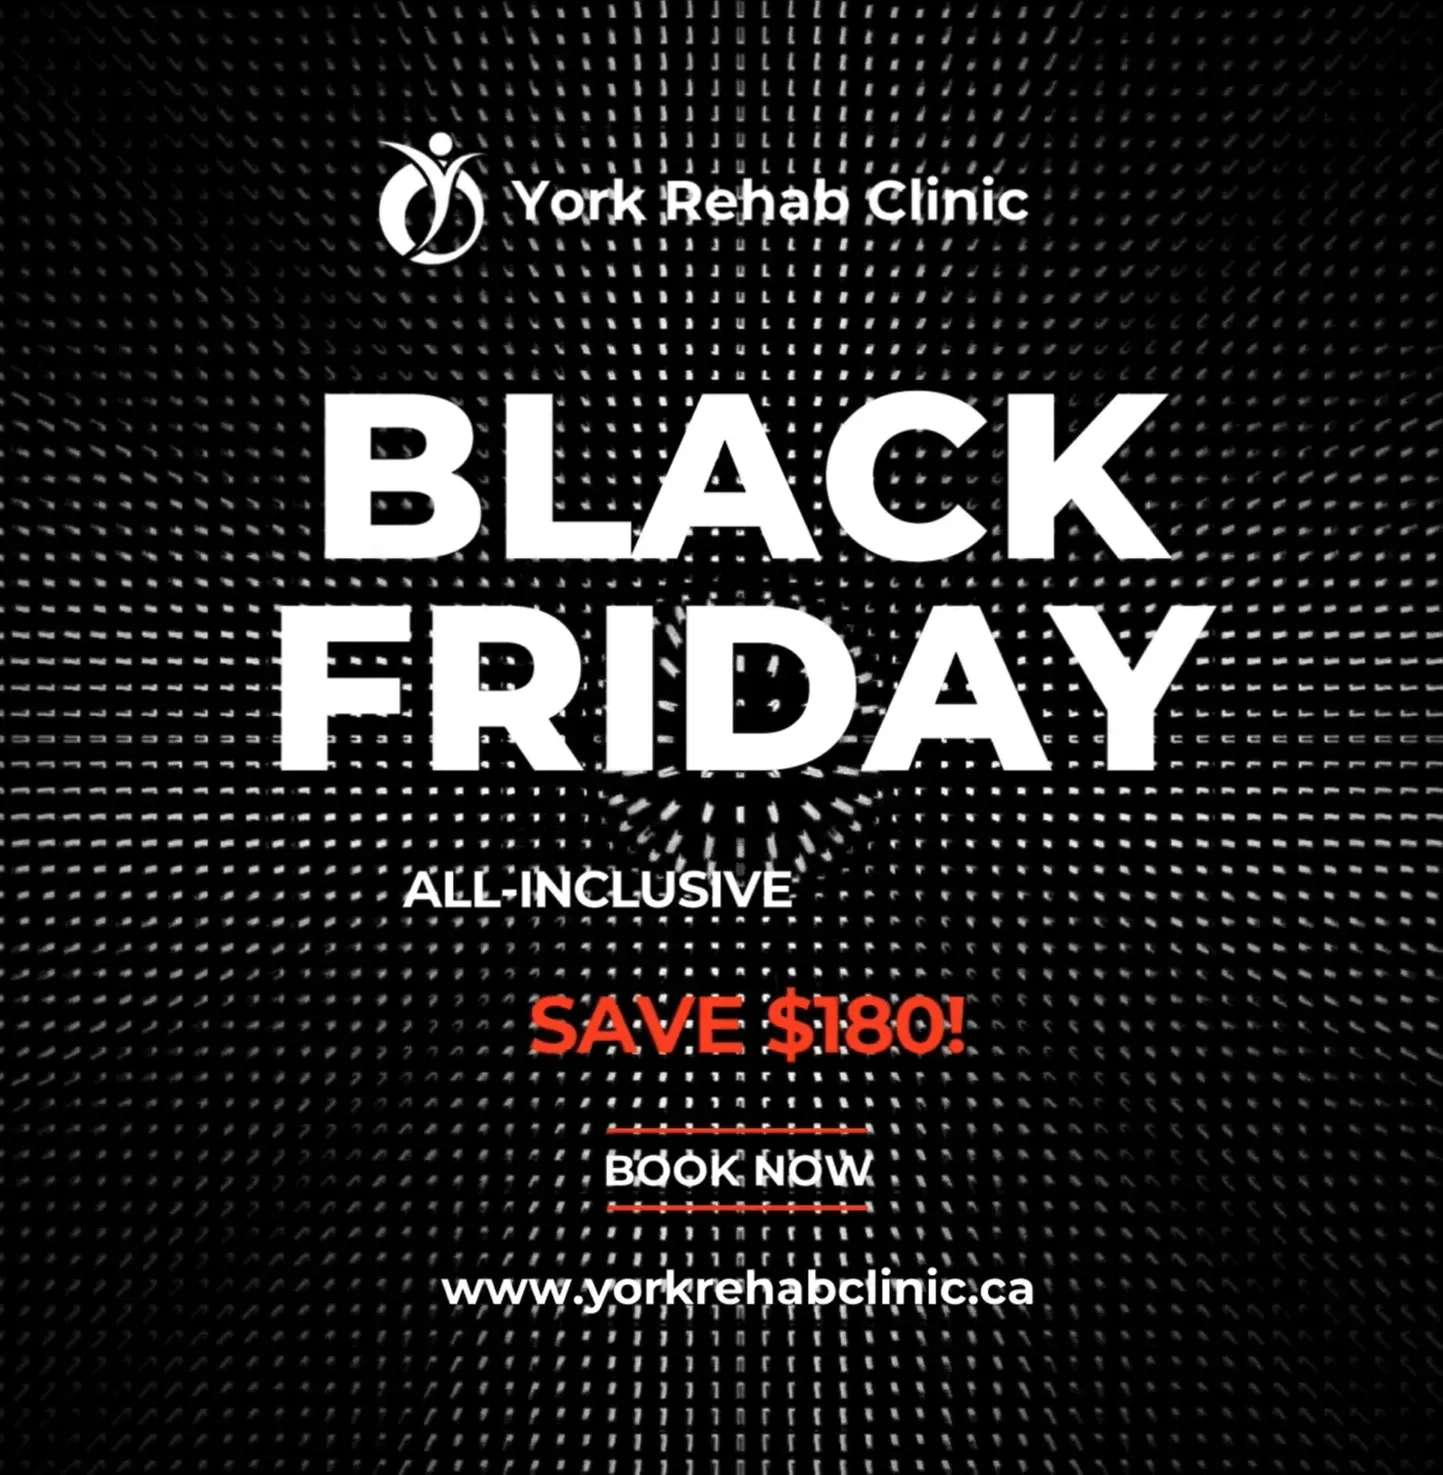 York Rehab Clinic | Black Friday Special